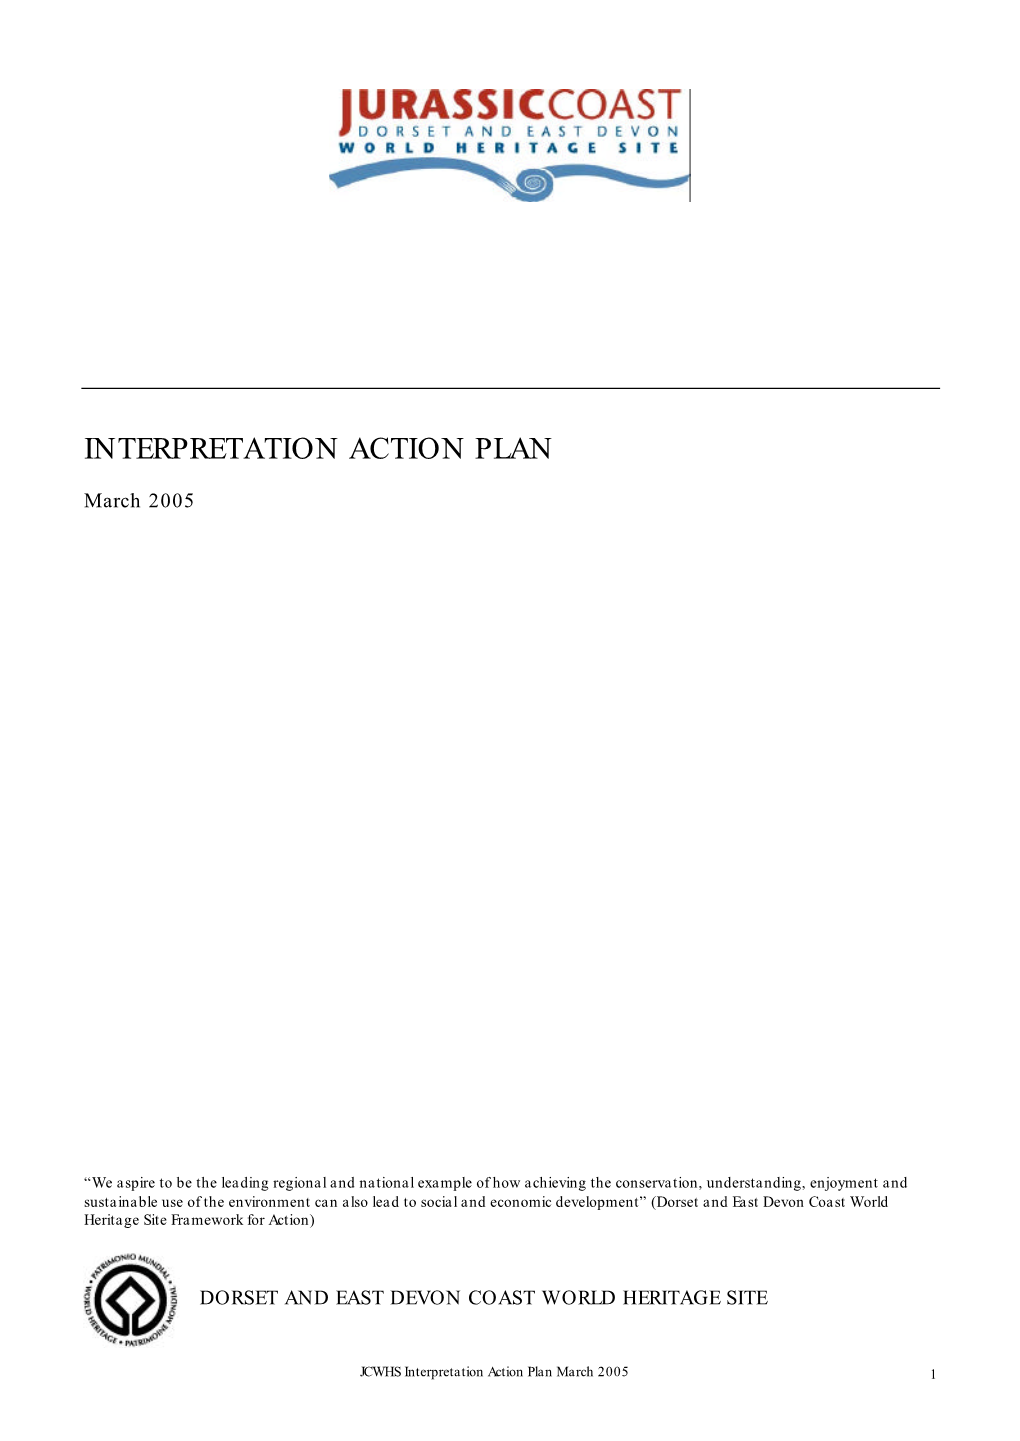 Interpretation Action Plan